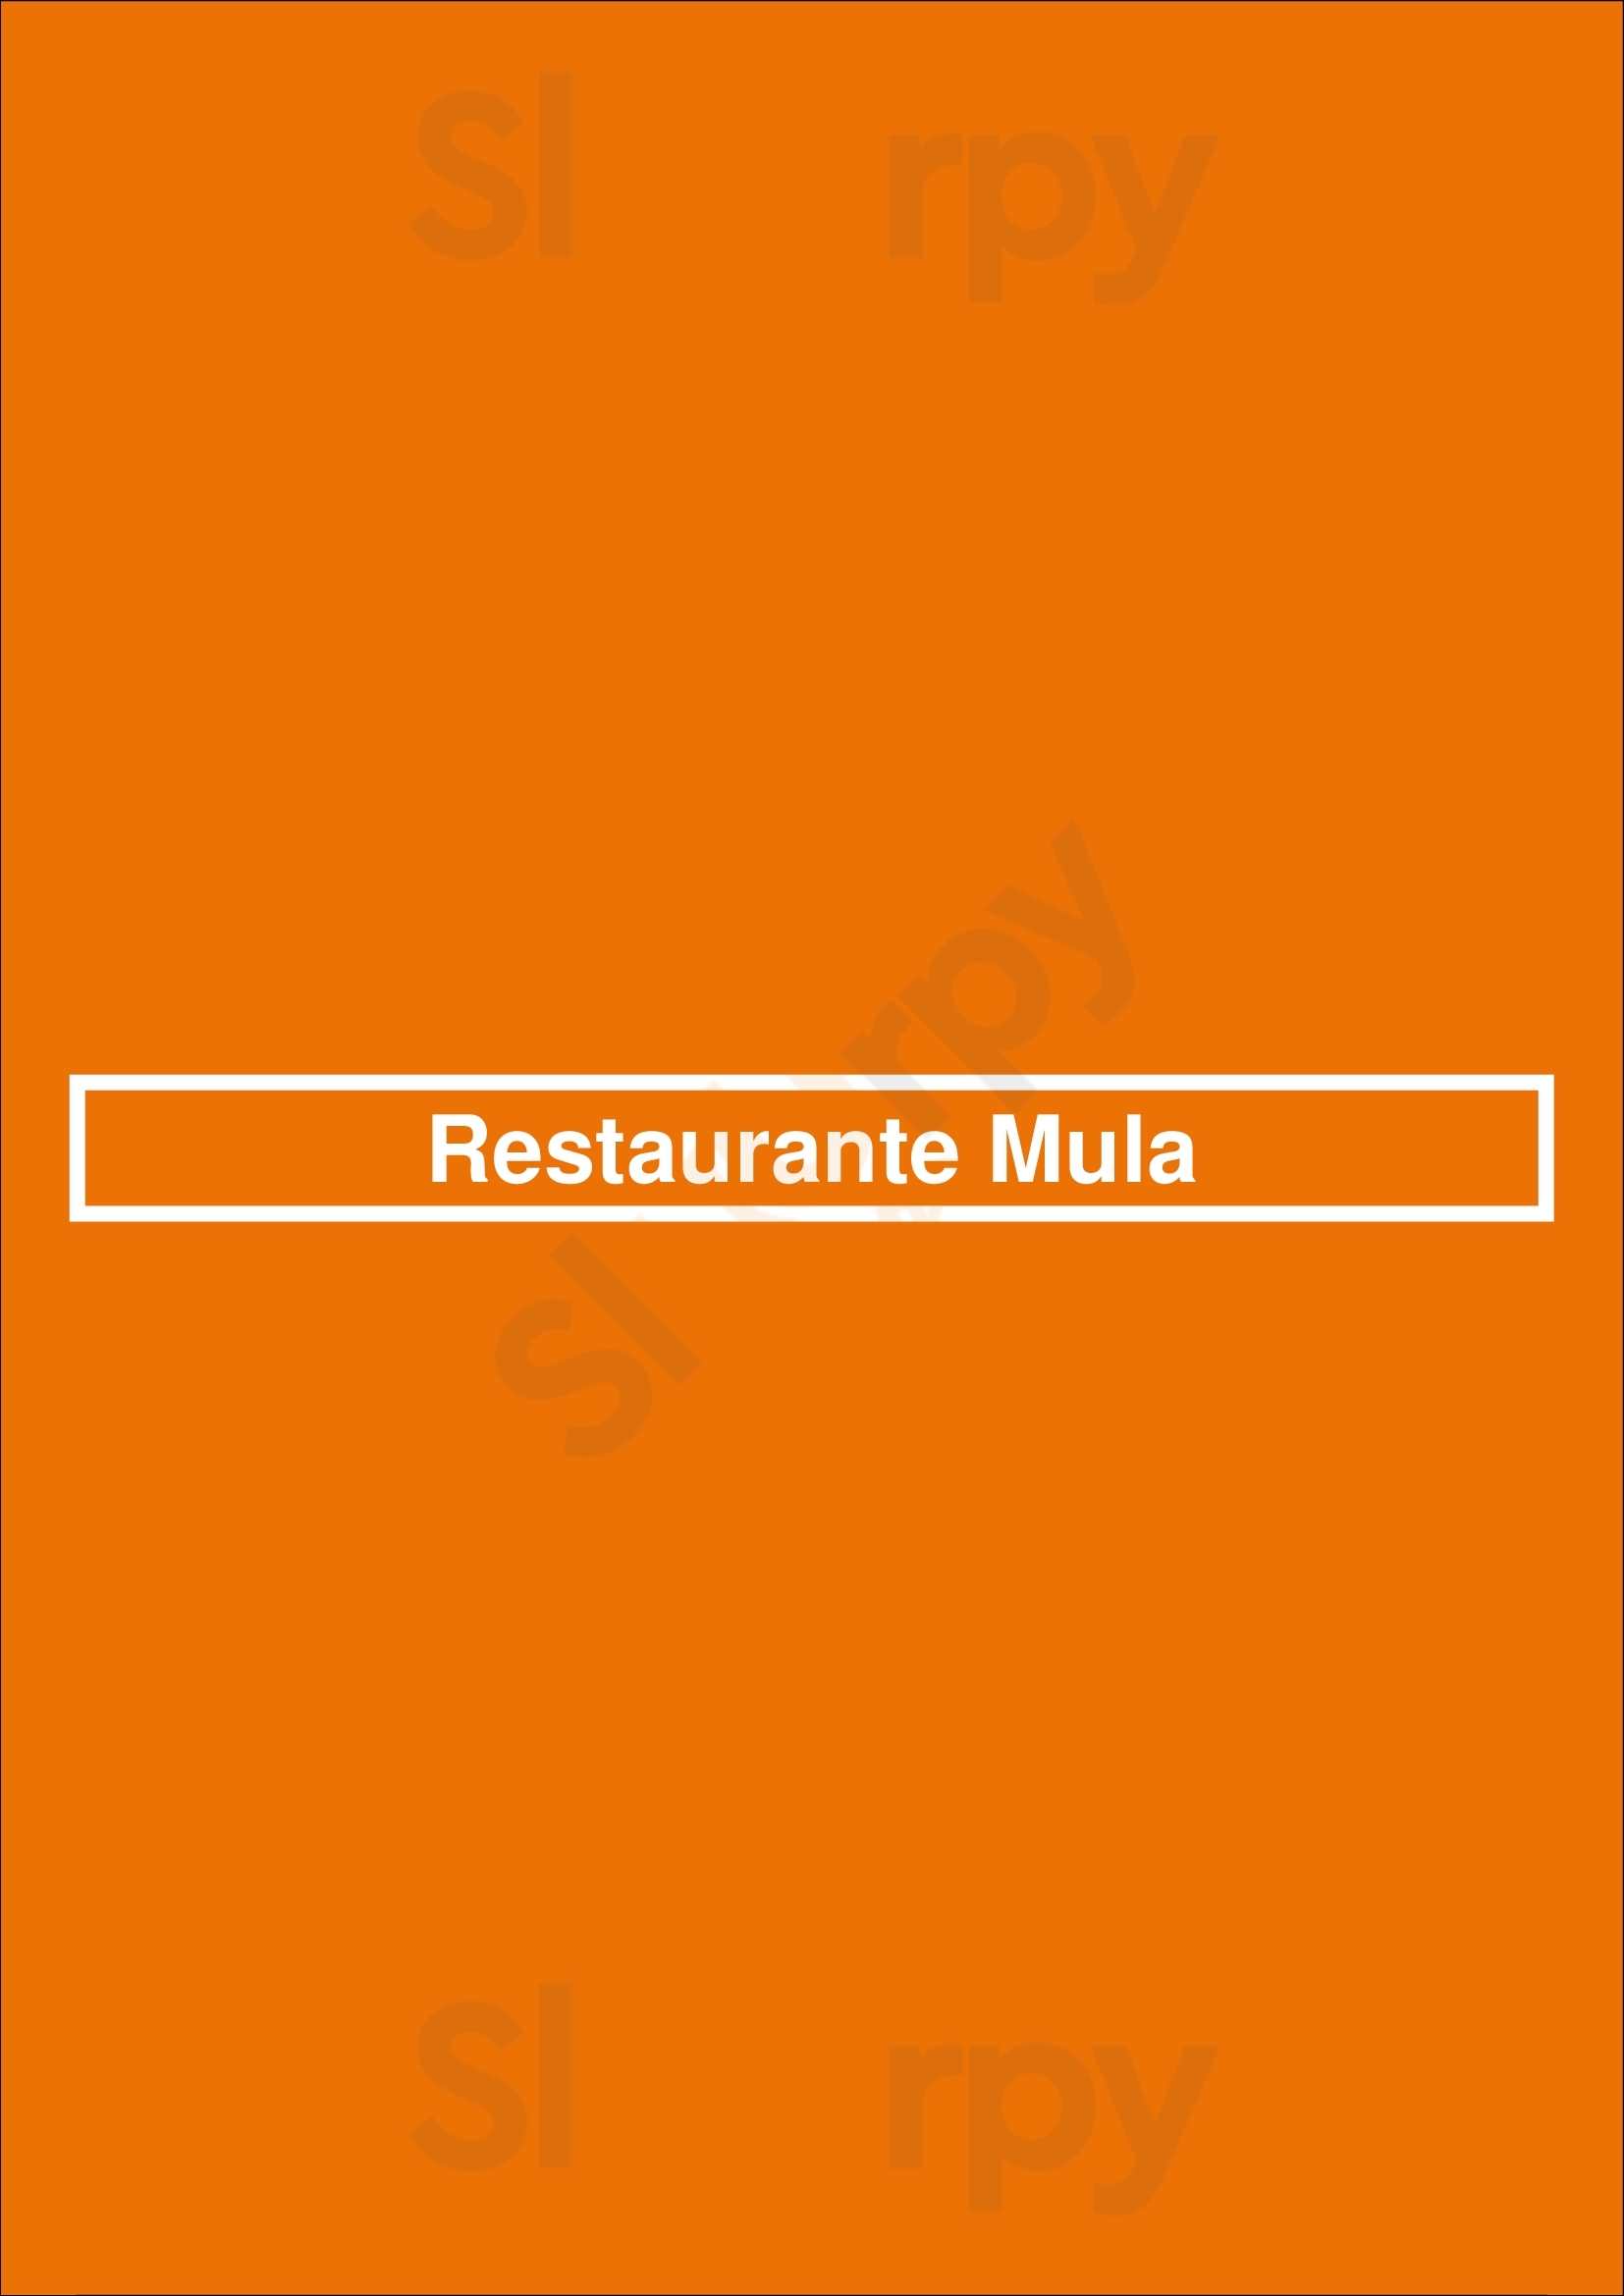 Restaurante Mula Funchal Menu - 1